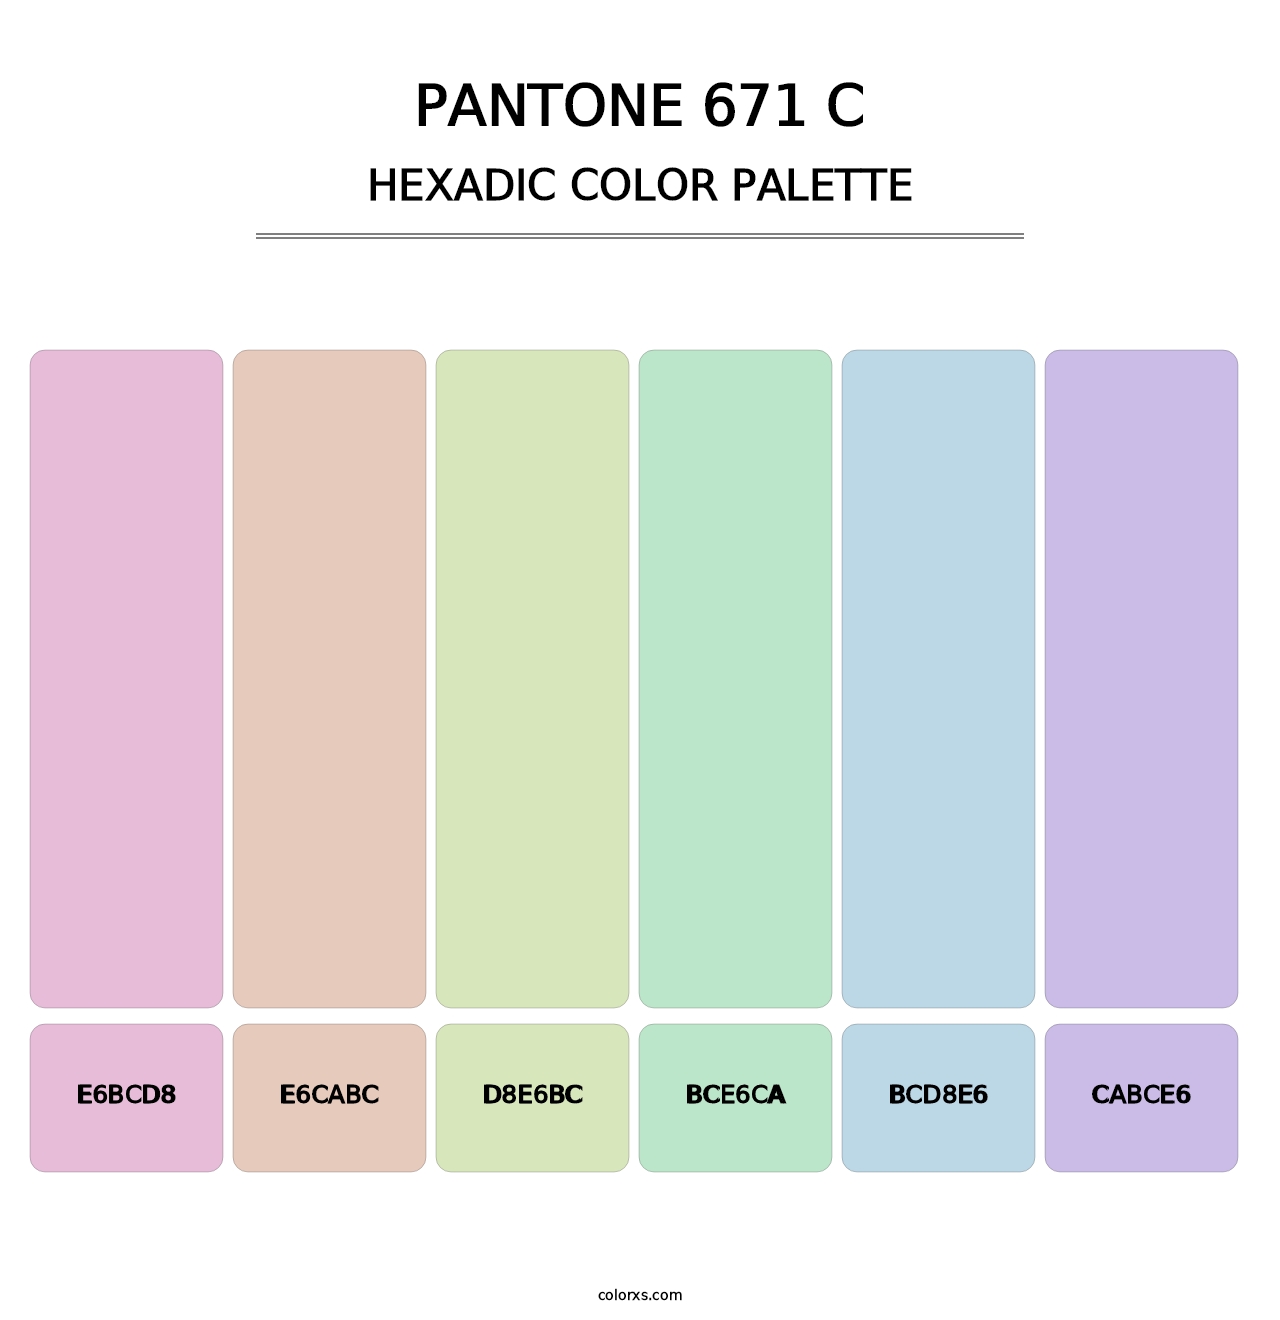 PANTONE 671 C - Hexadic Color Palette